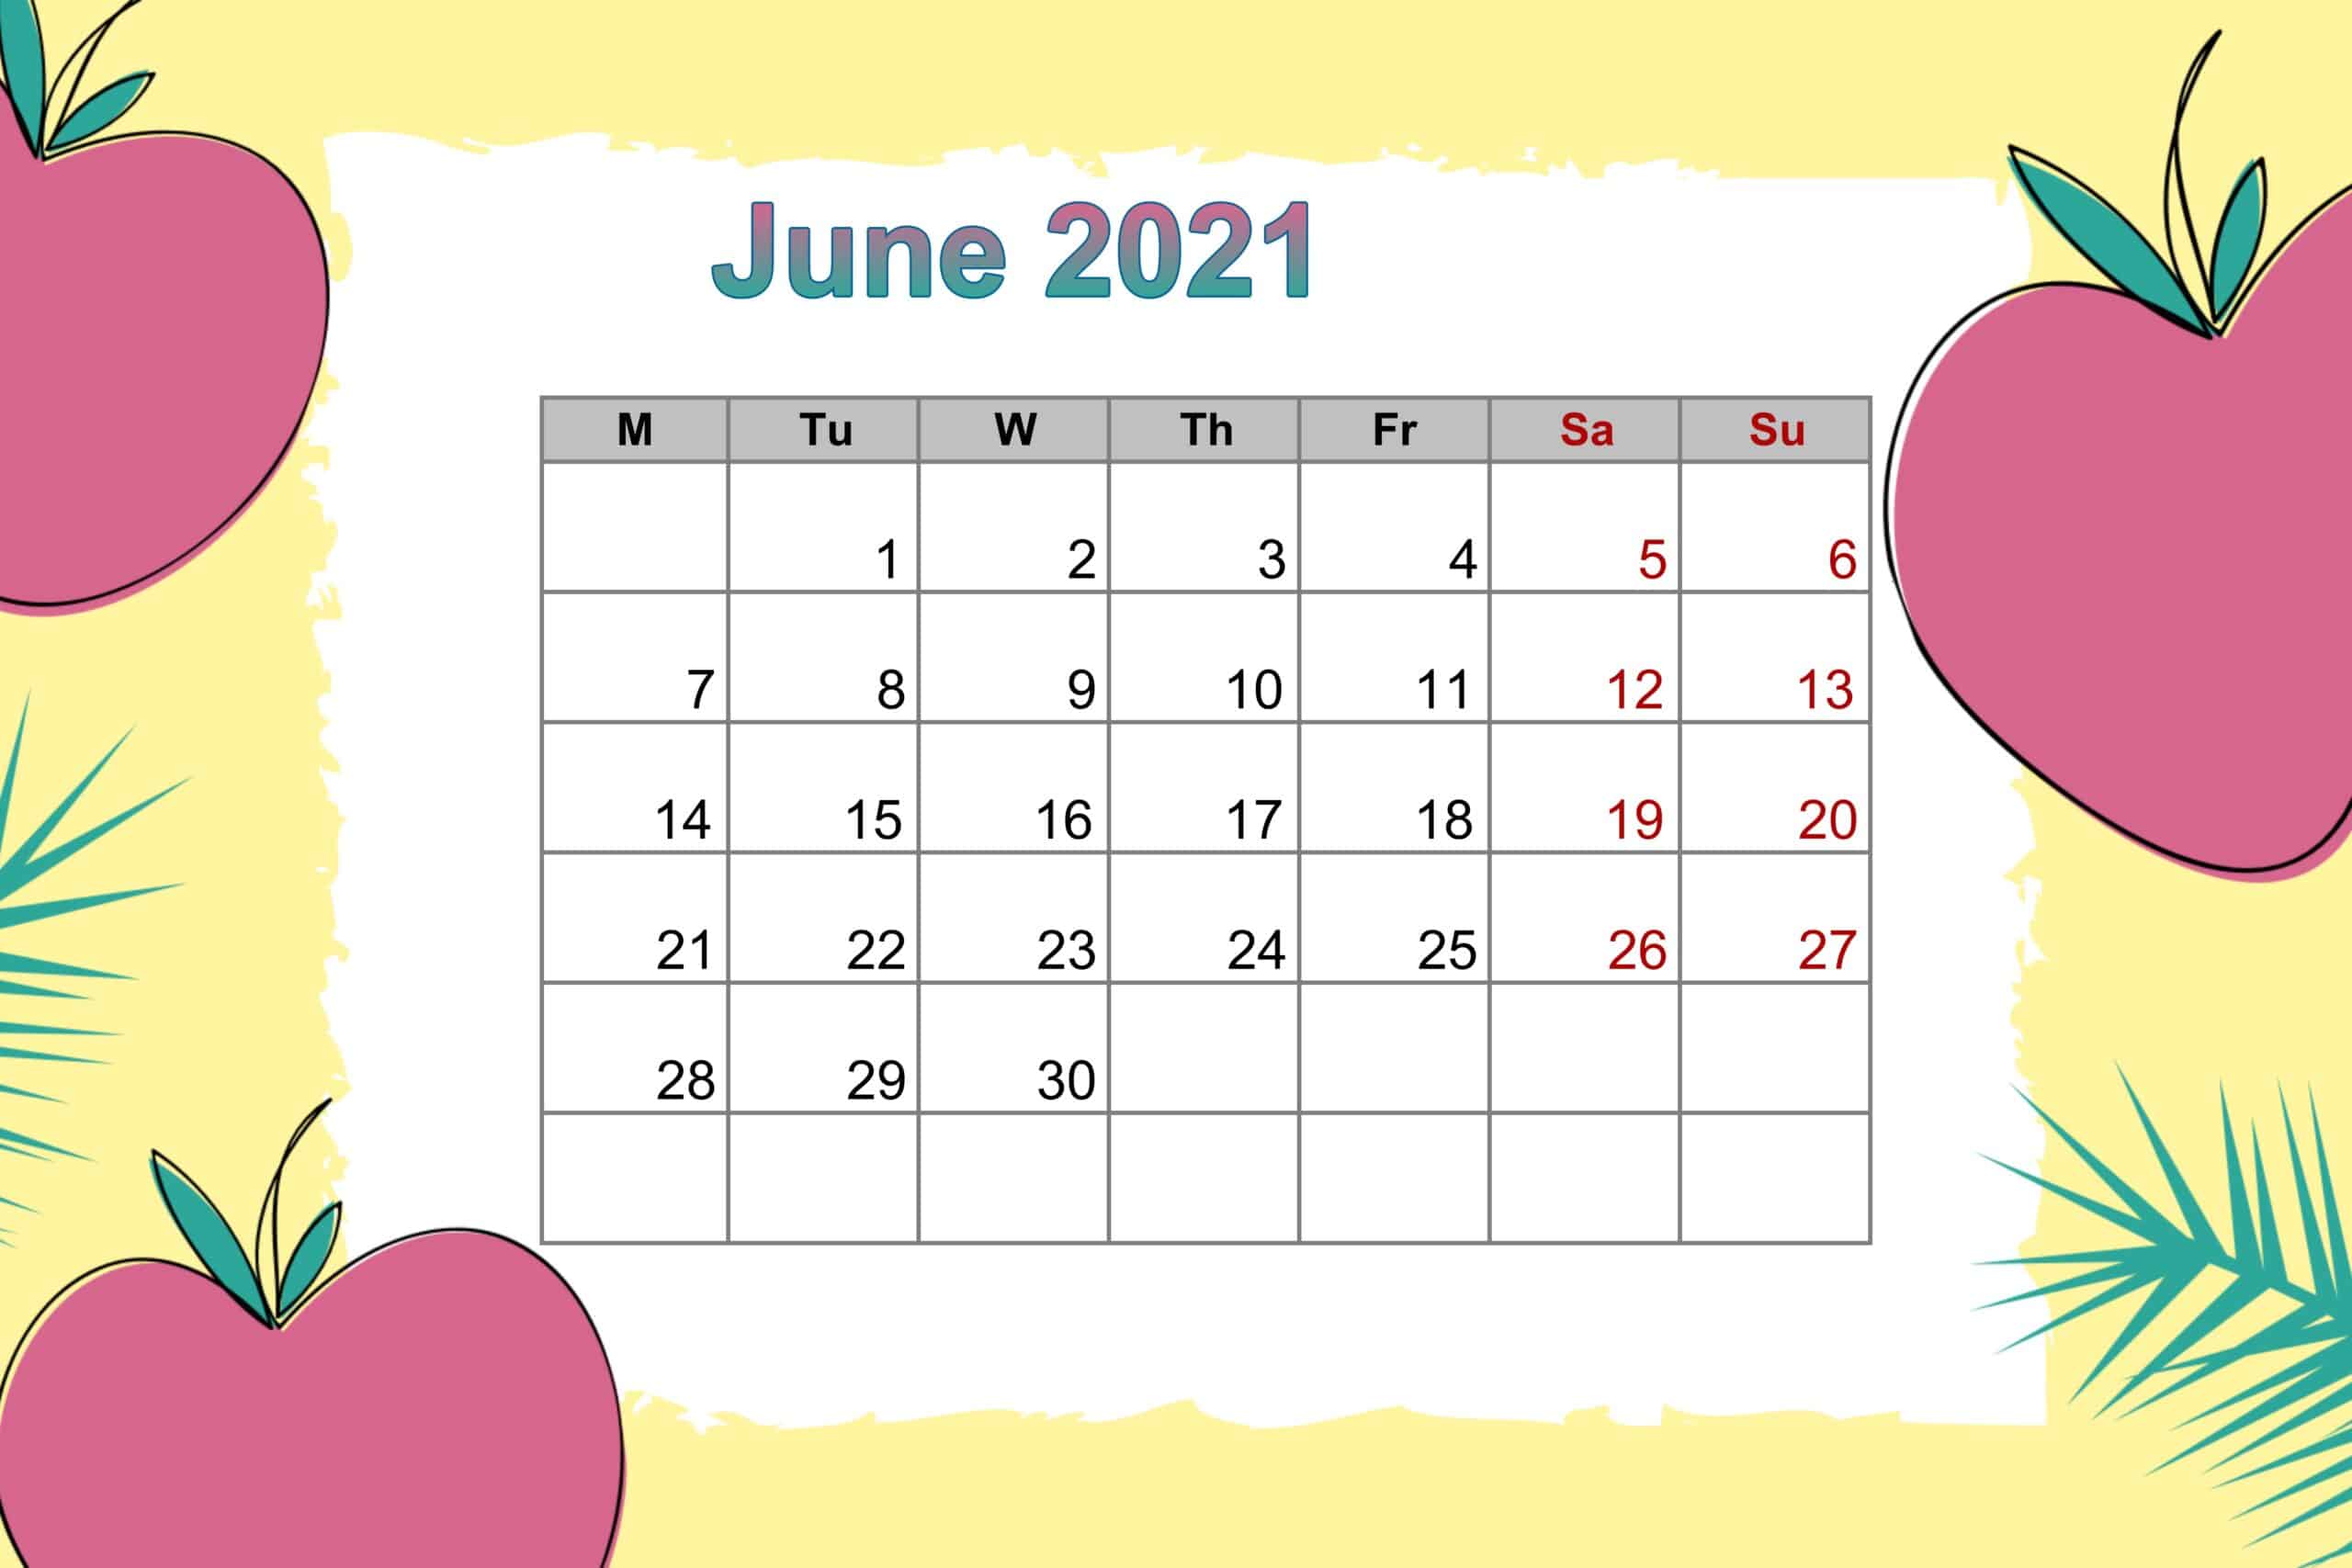 June 2021 Floral Calendar